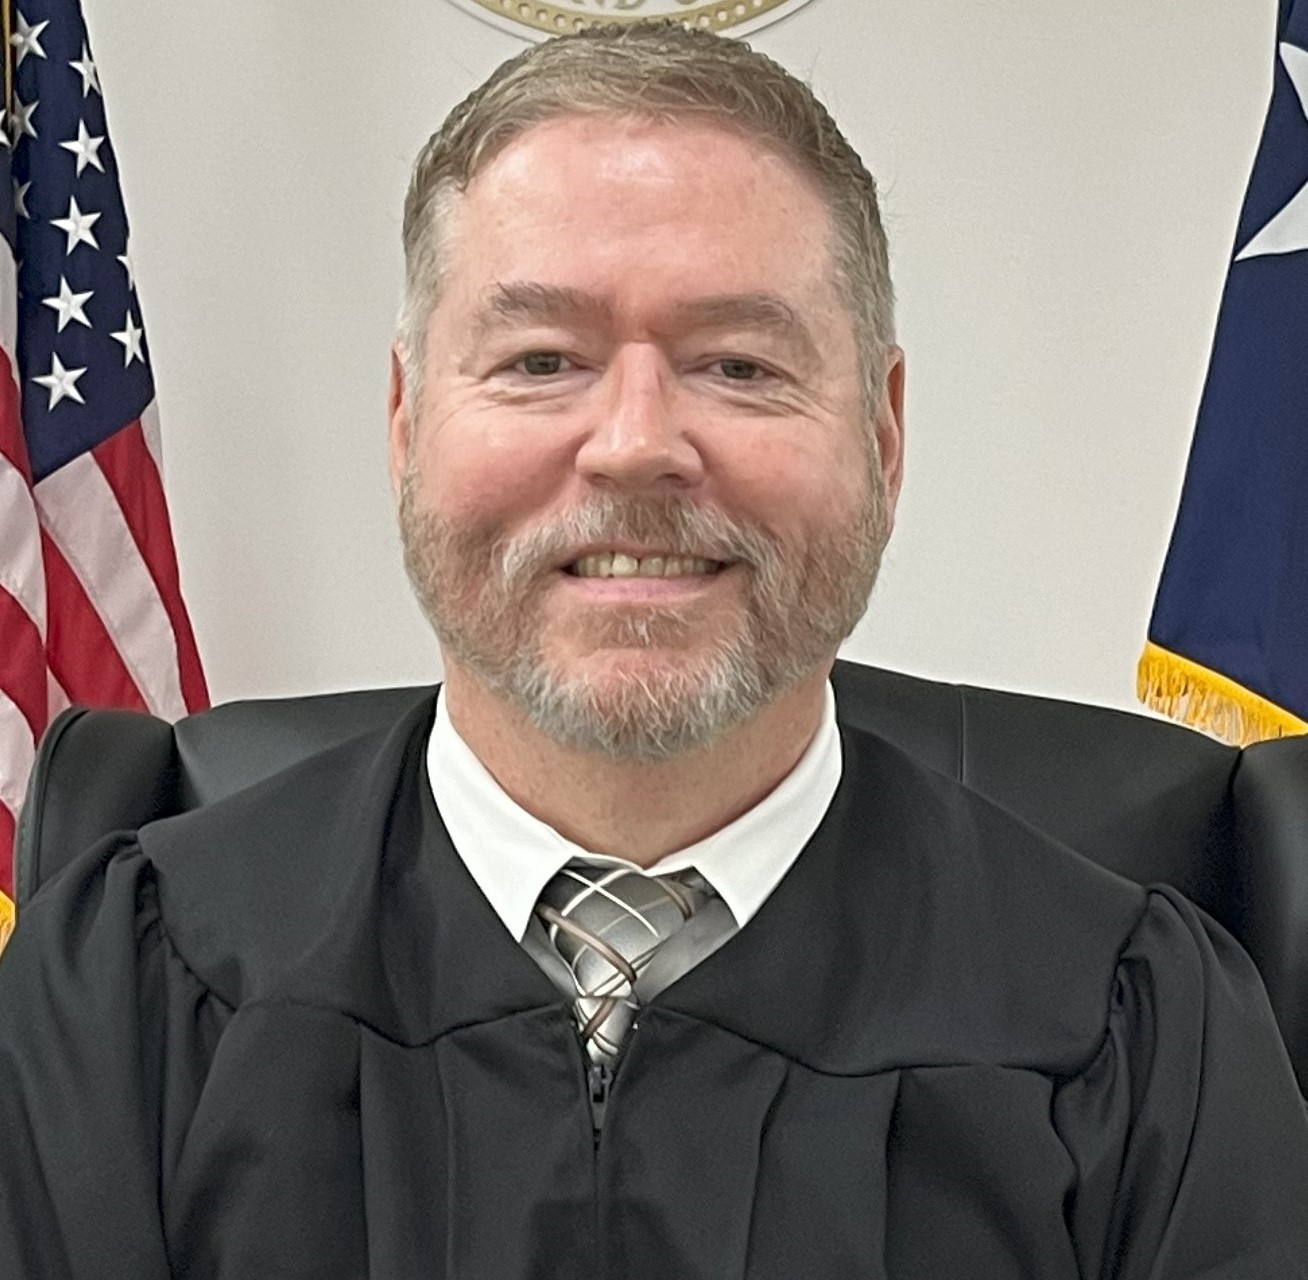 Judge Moore